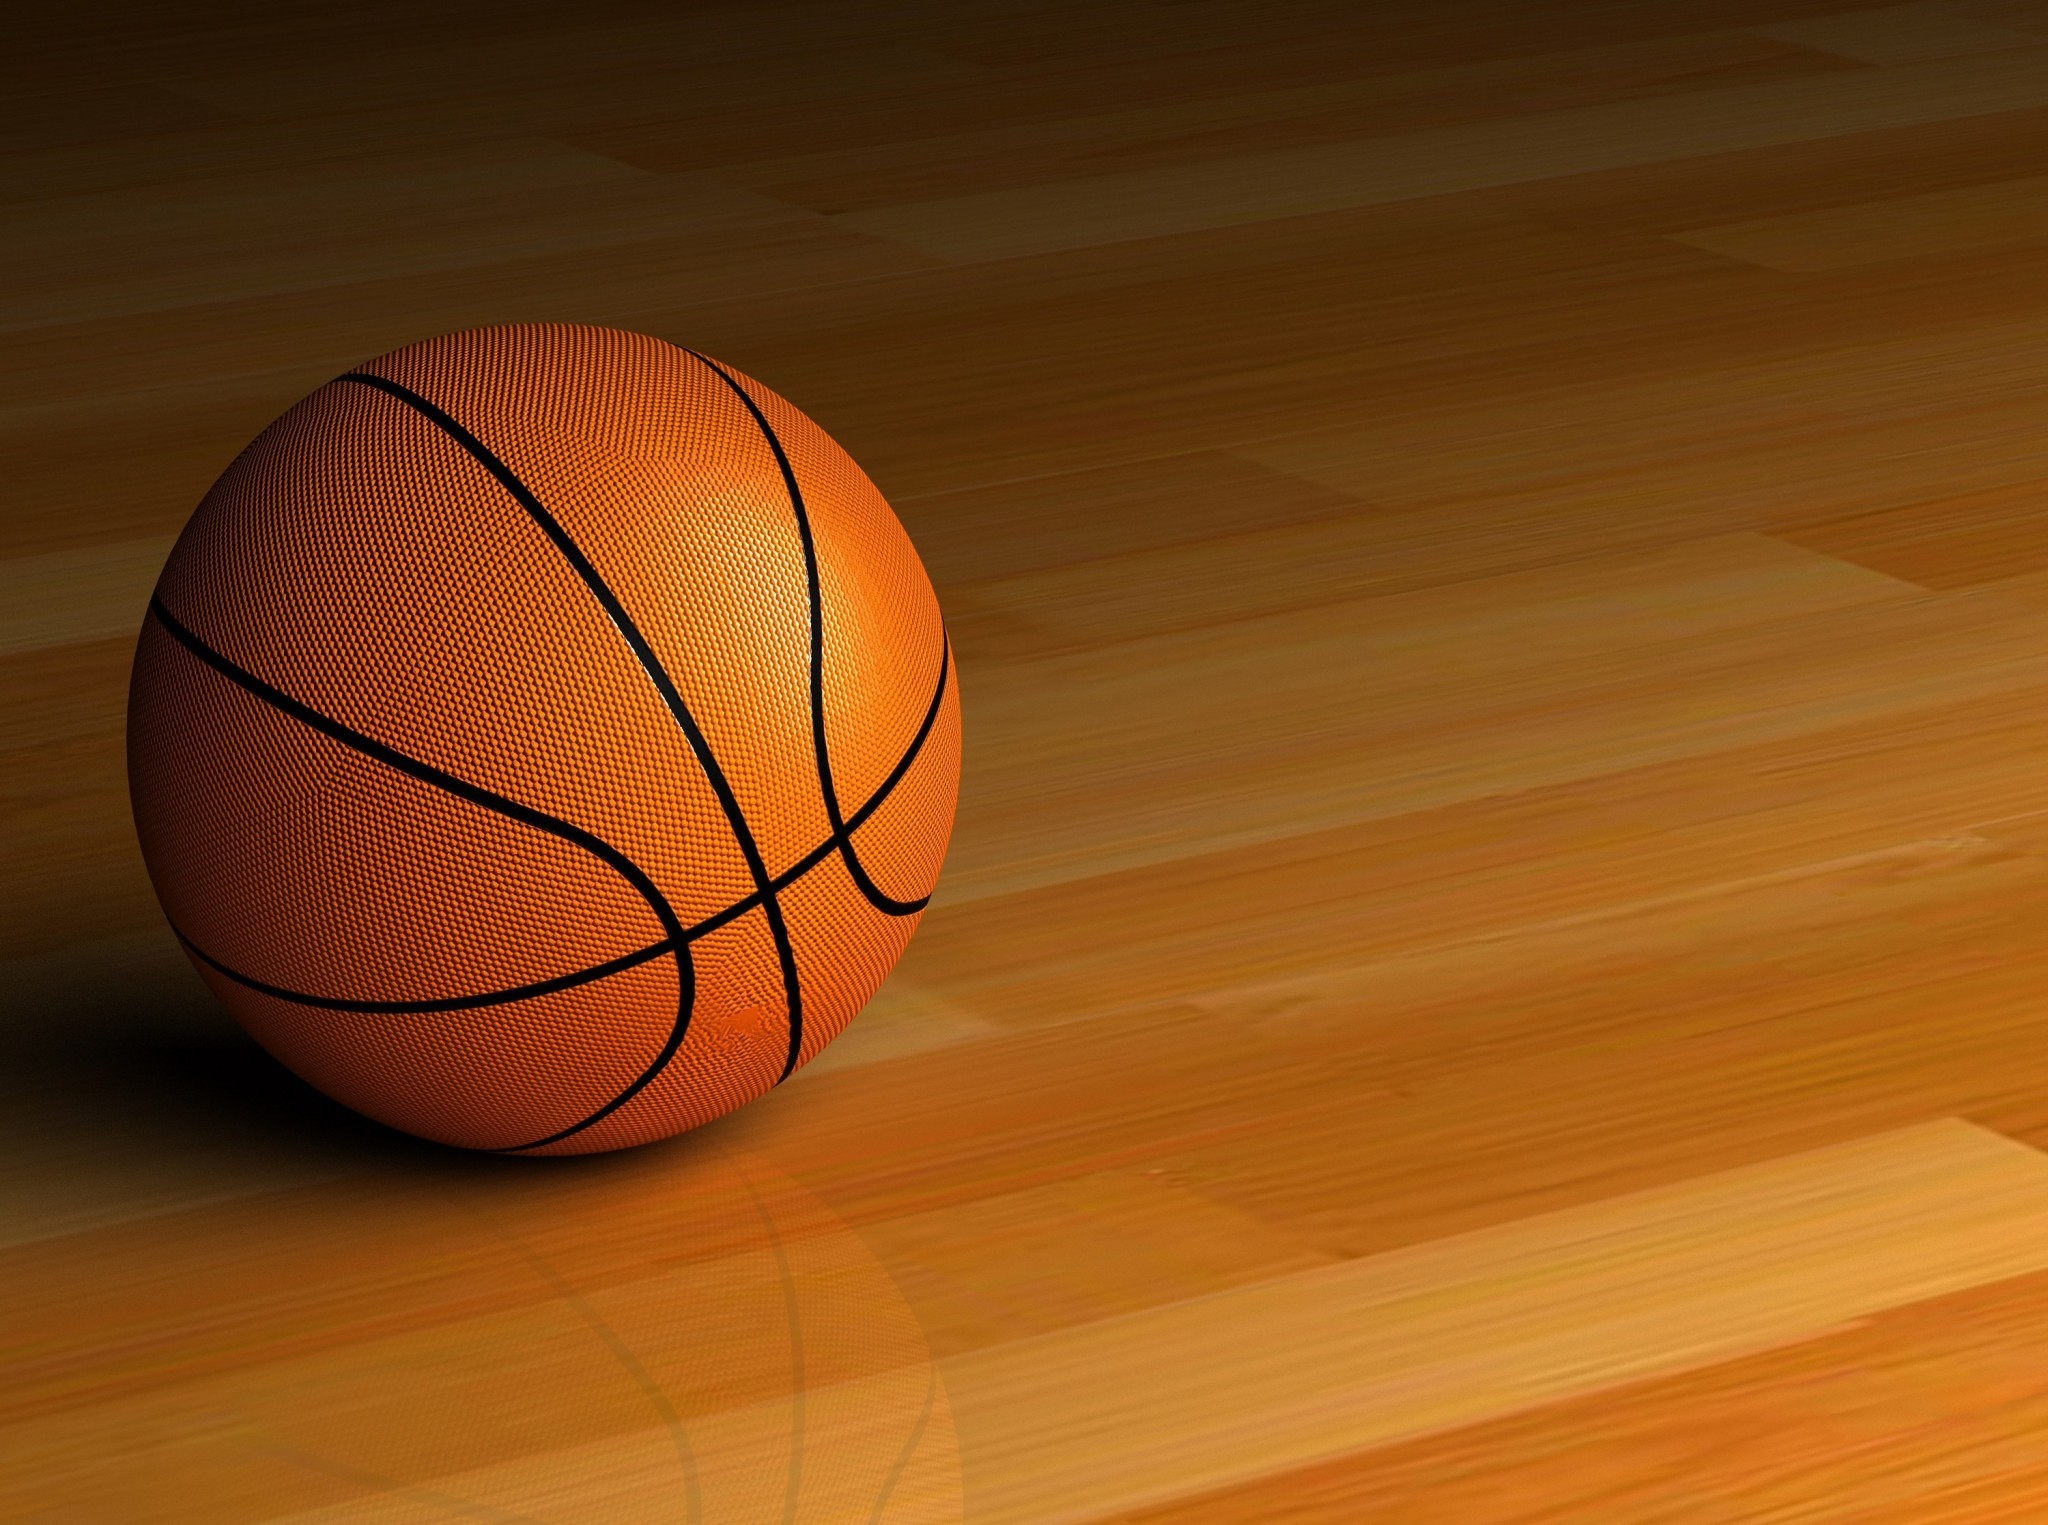 fonds d'écran de basket ball,basketball,orange,basketball,bois dur,bois